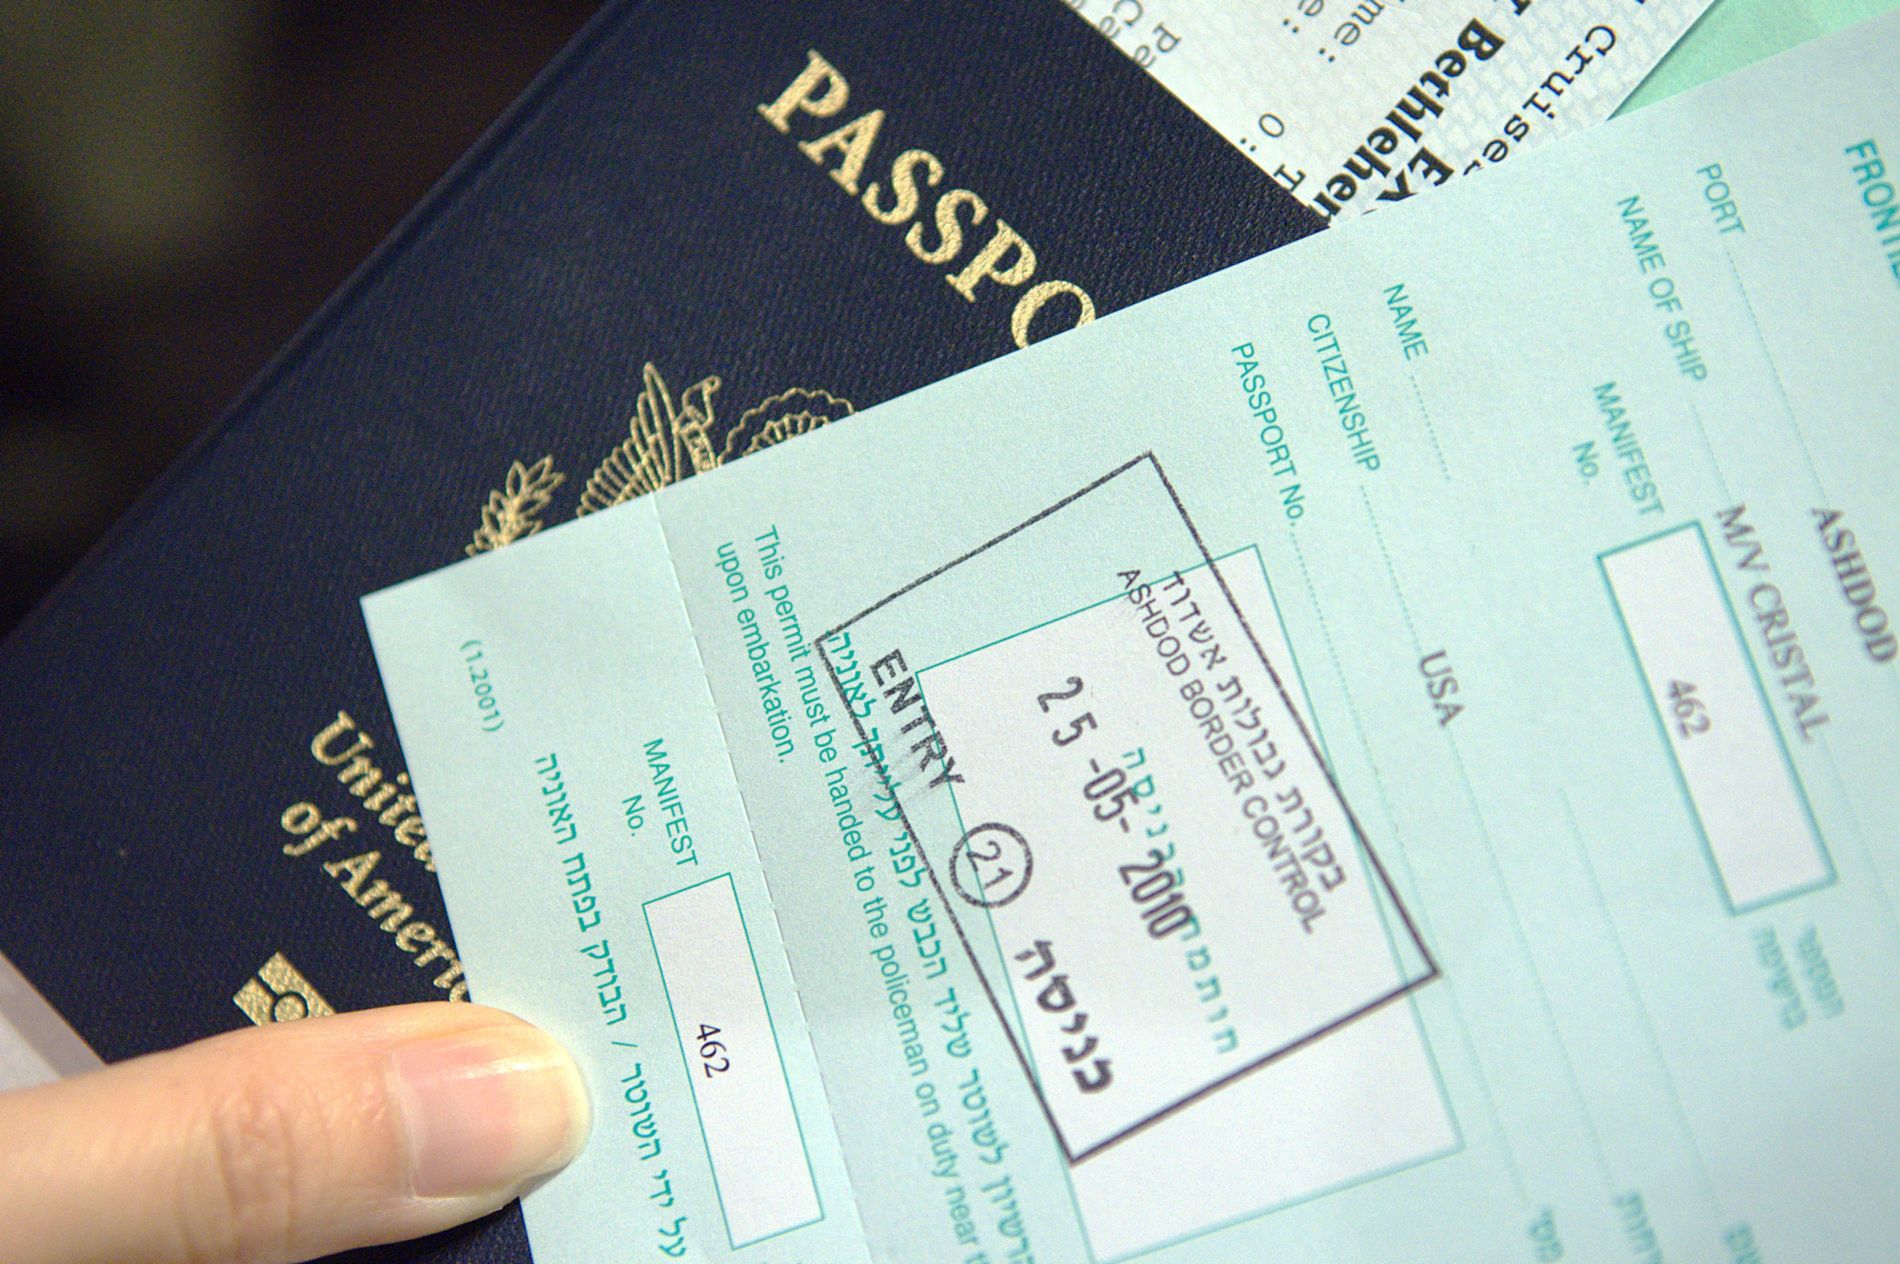 Passport and Visa Documents by George Ruiz via Wikimedia Commons